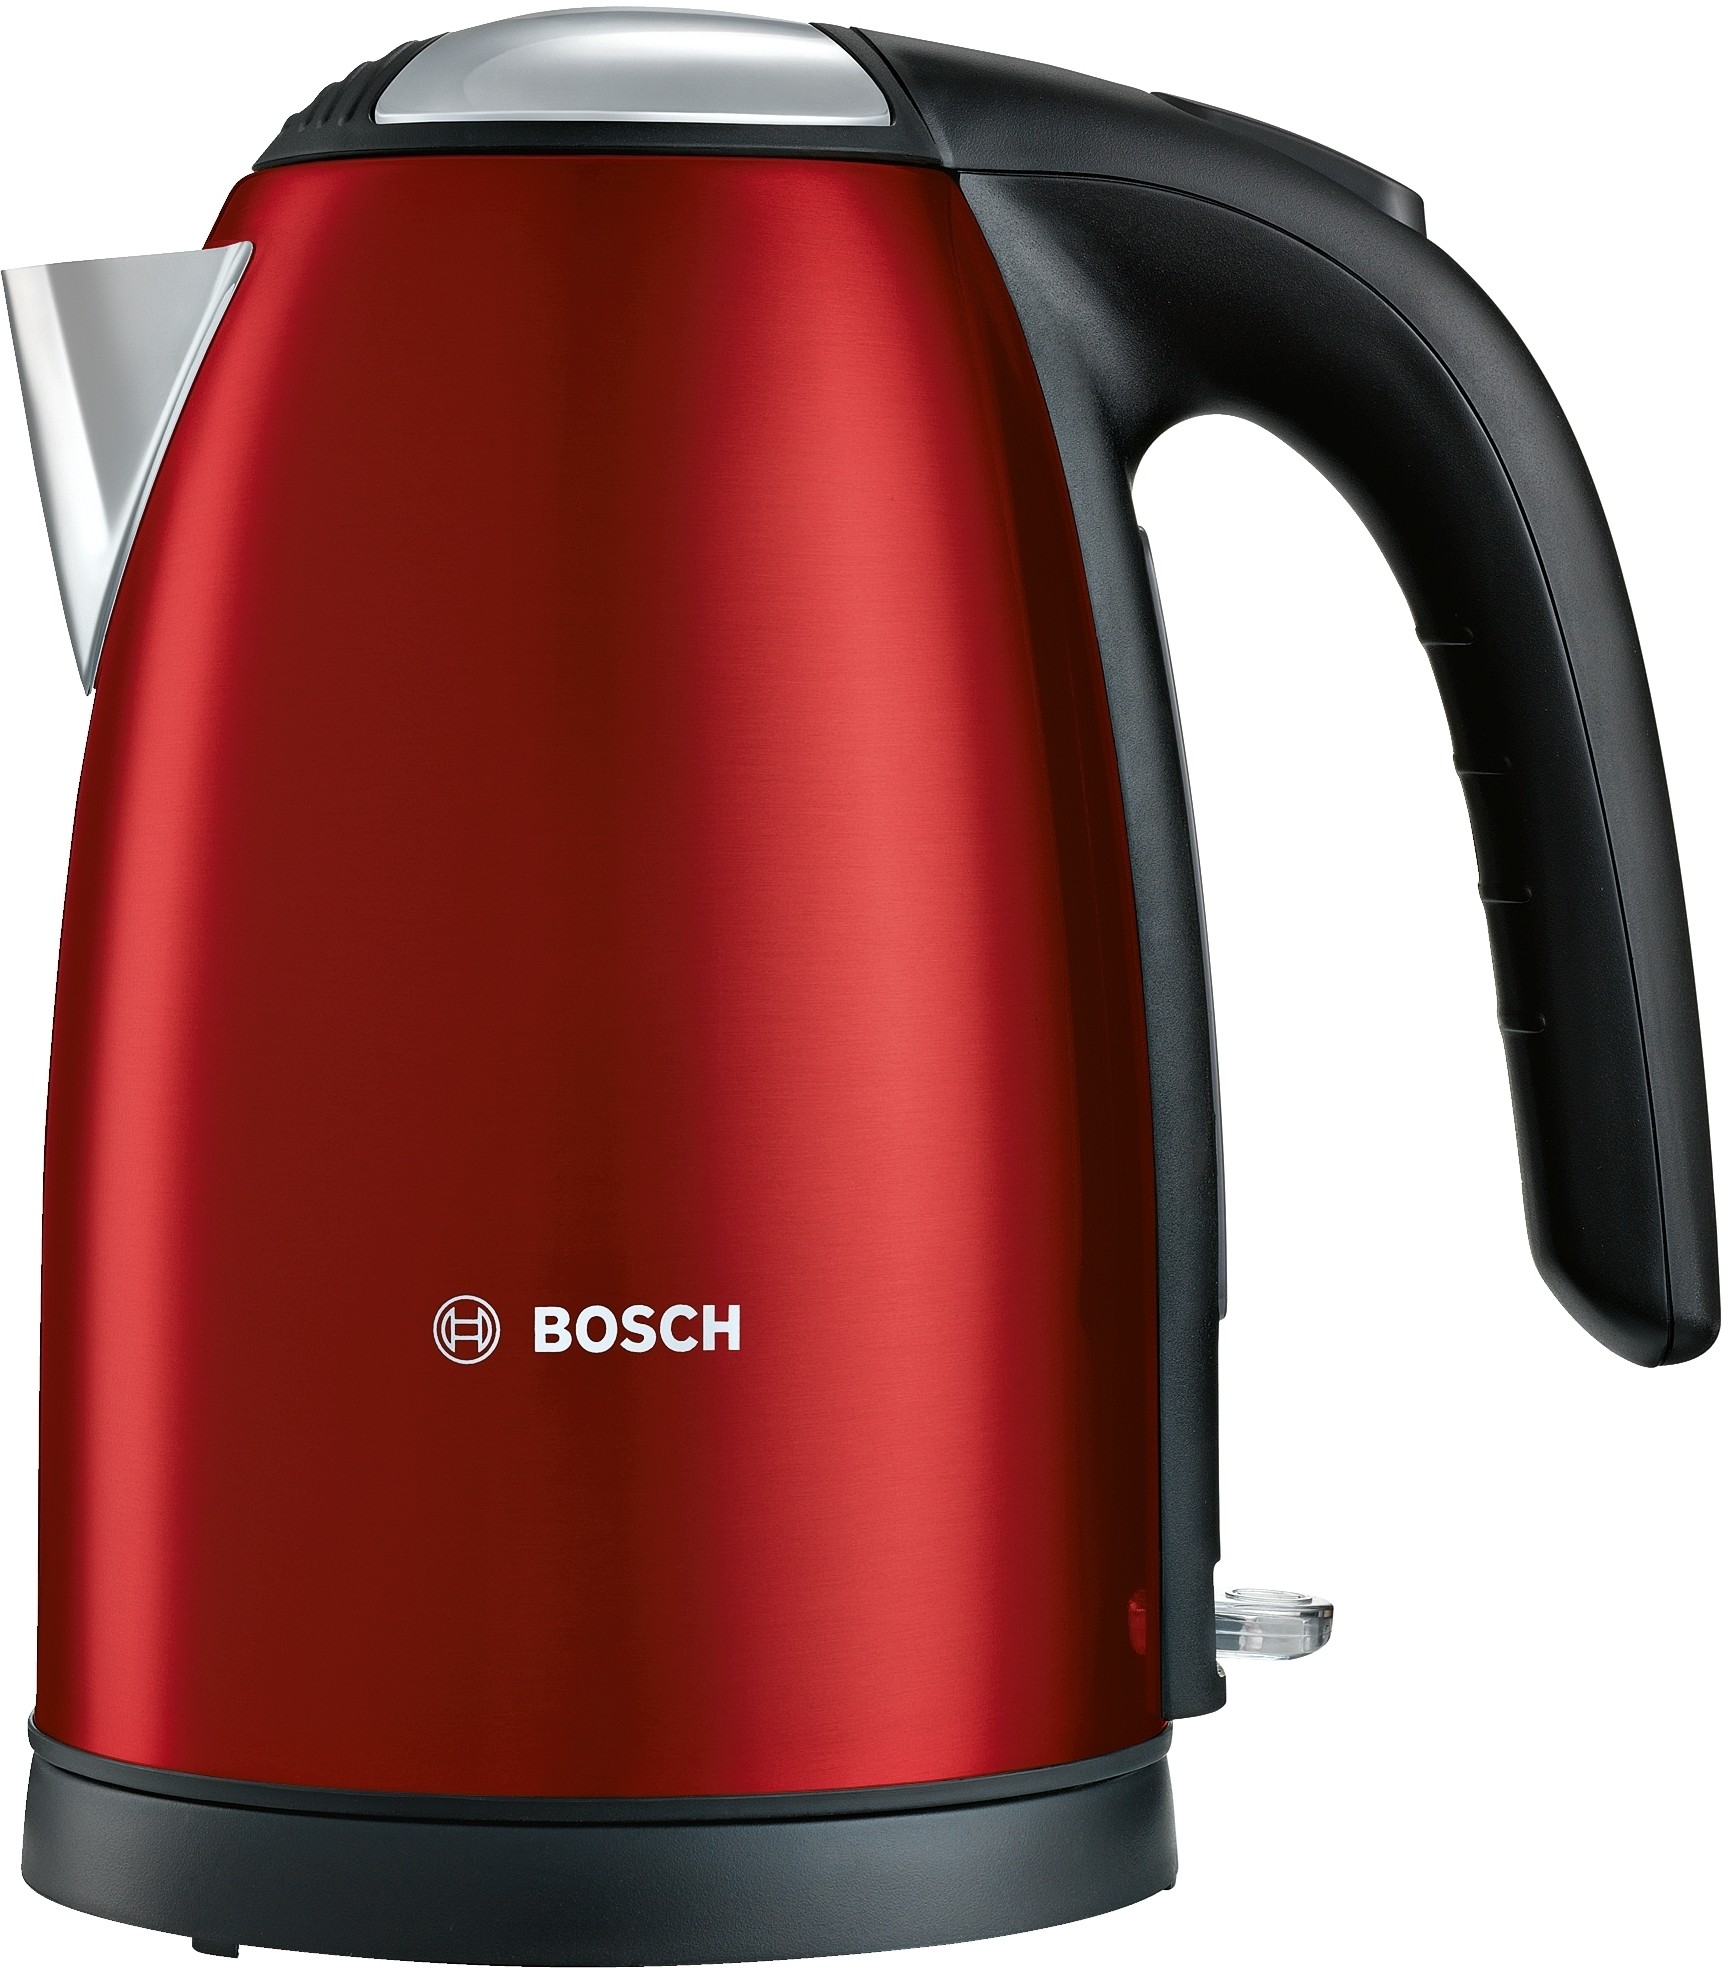 Bosch TWK7804 waterkoker rood - De Witgoed